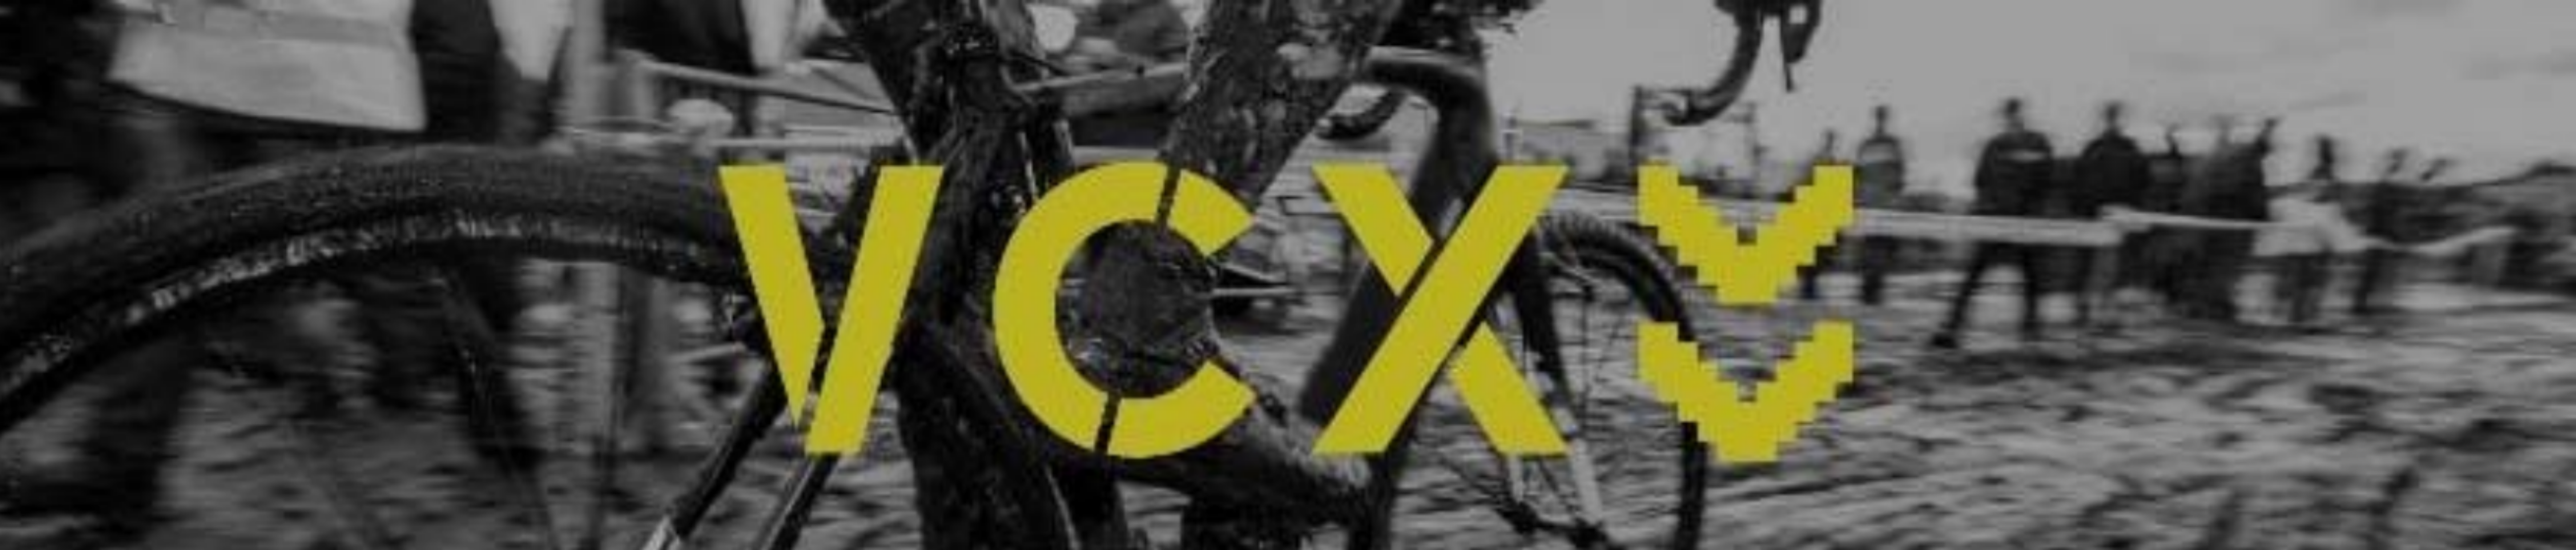 Varberg Cyclocross SWE Cup CX 2021